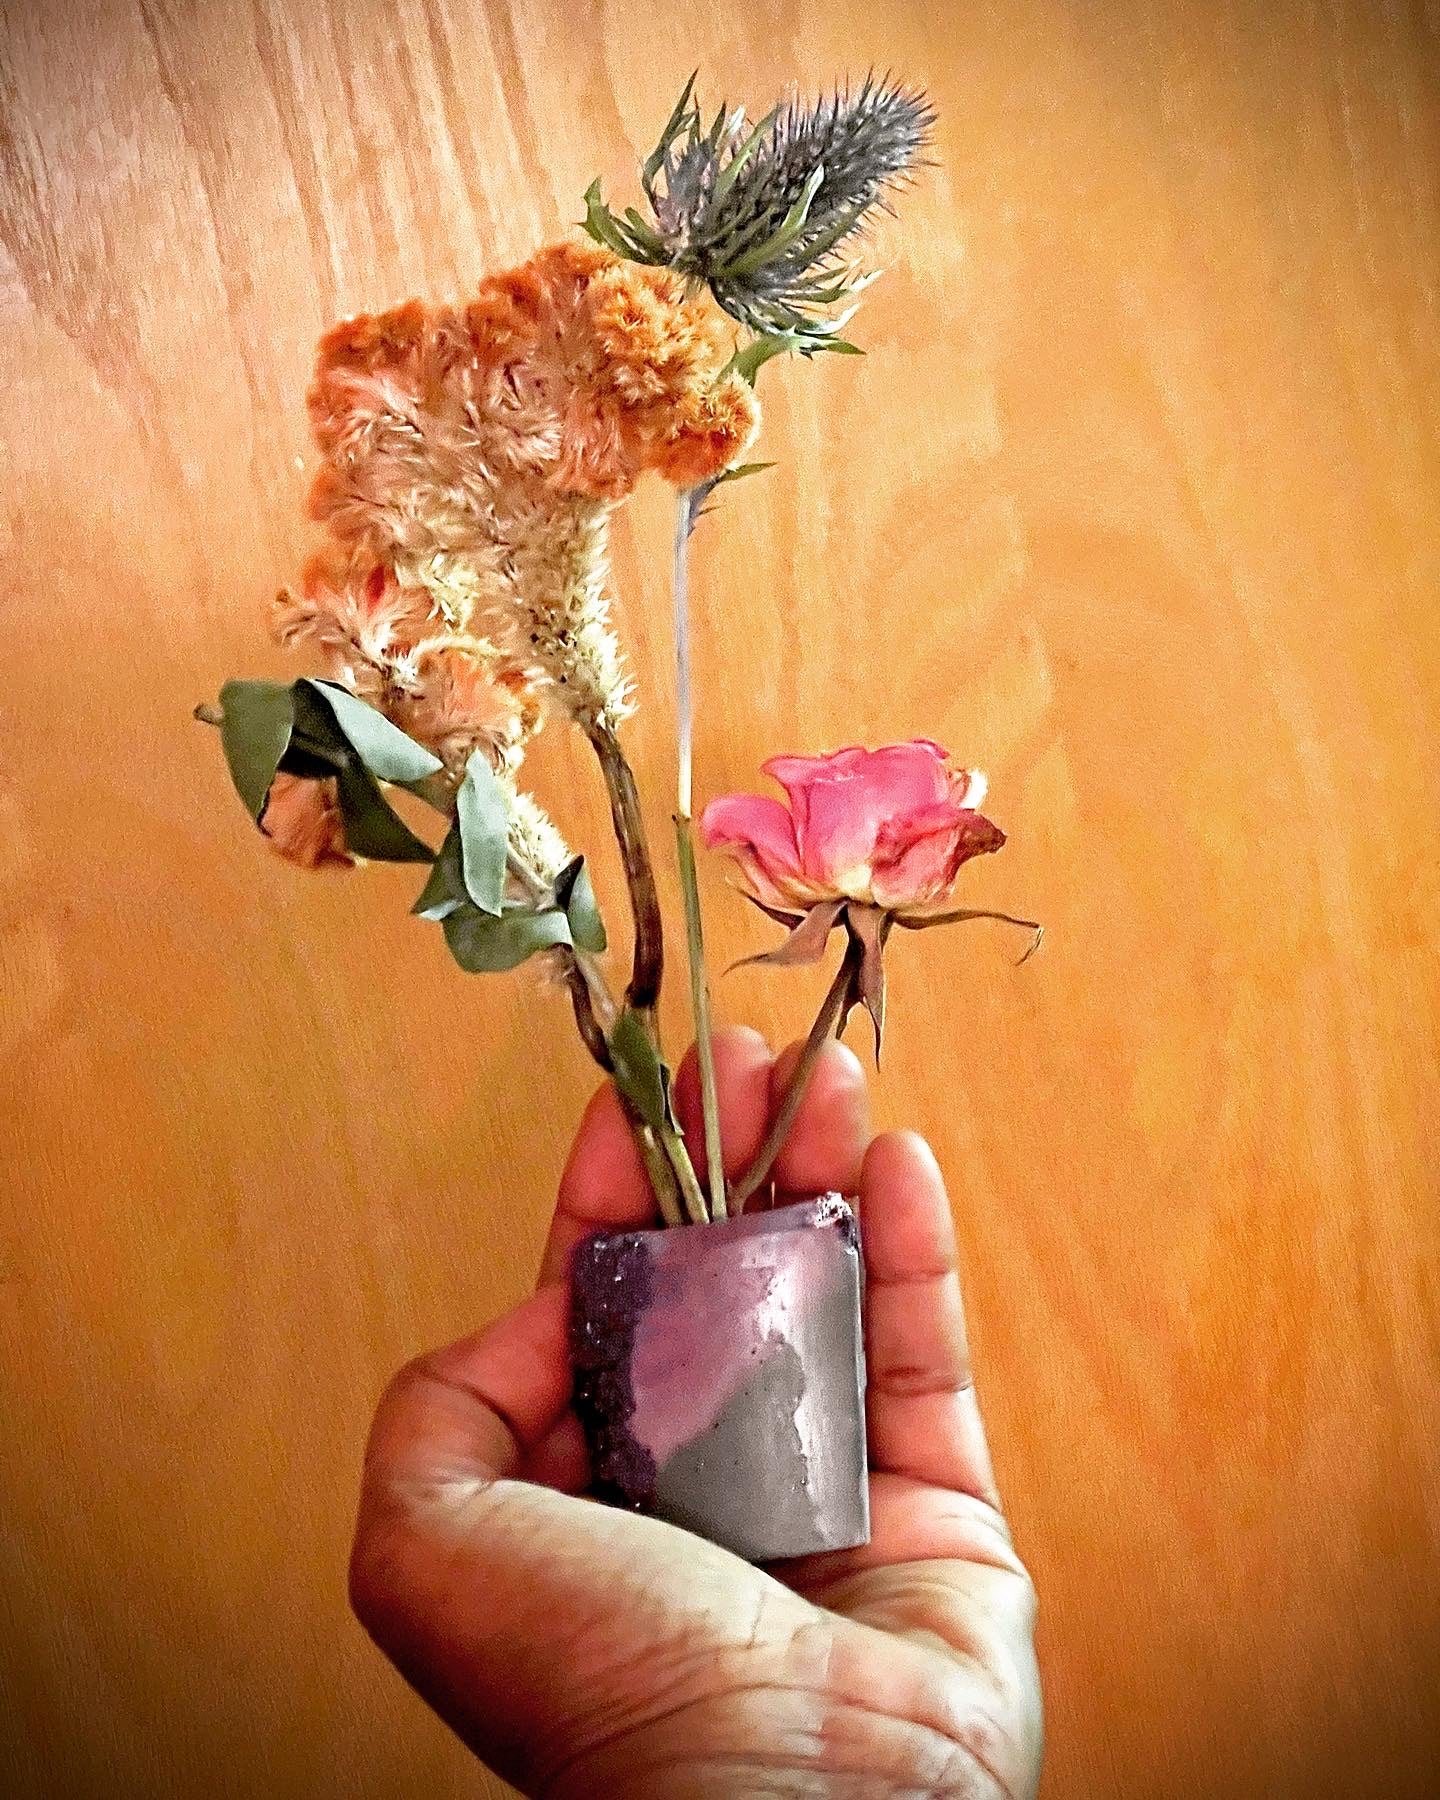 Your favorite little vase